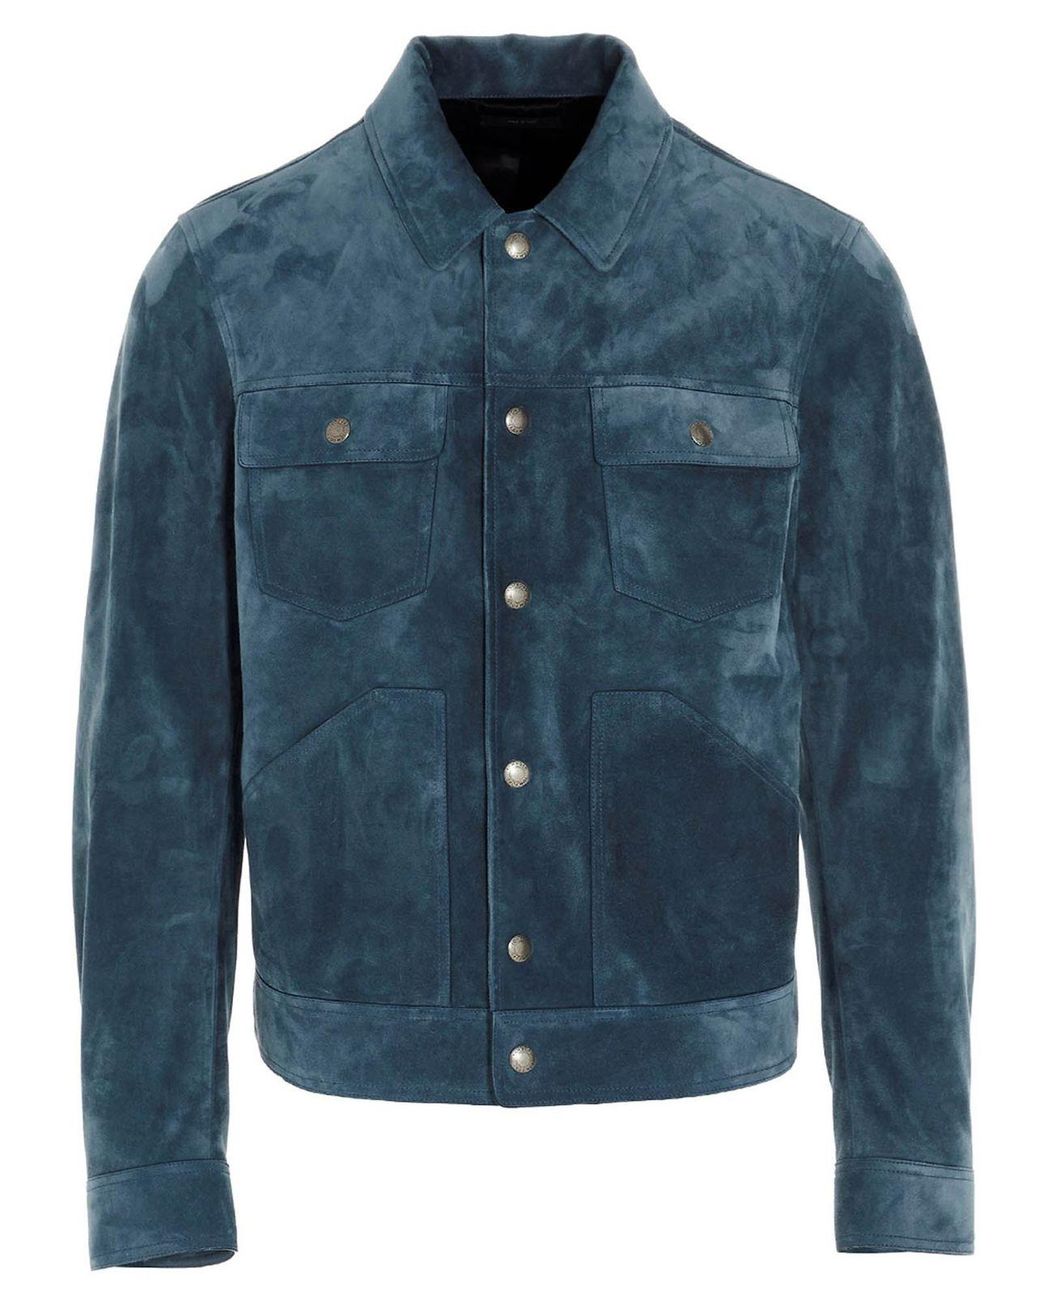 Tom Ford Western Jacket In Denim Blue for Men - Lyst